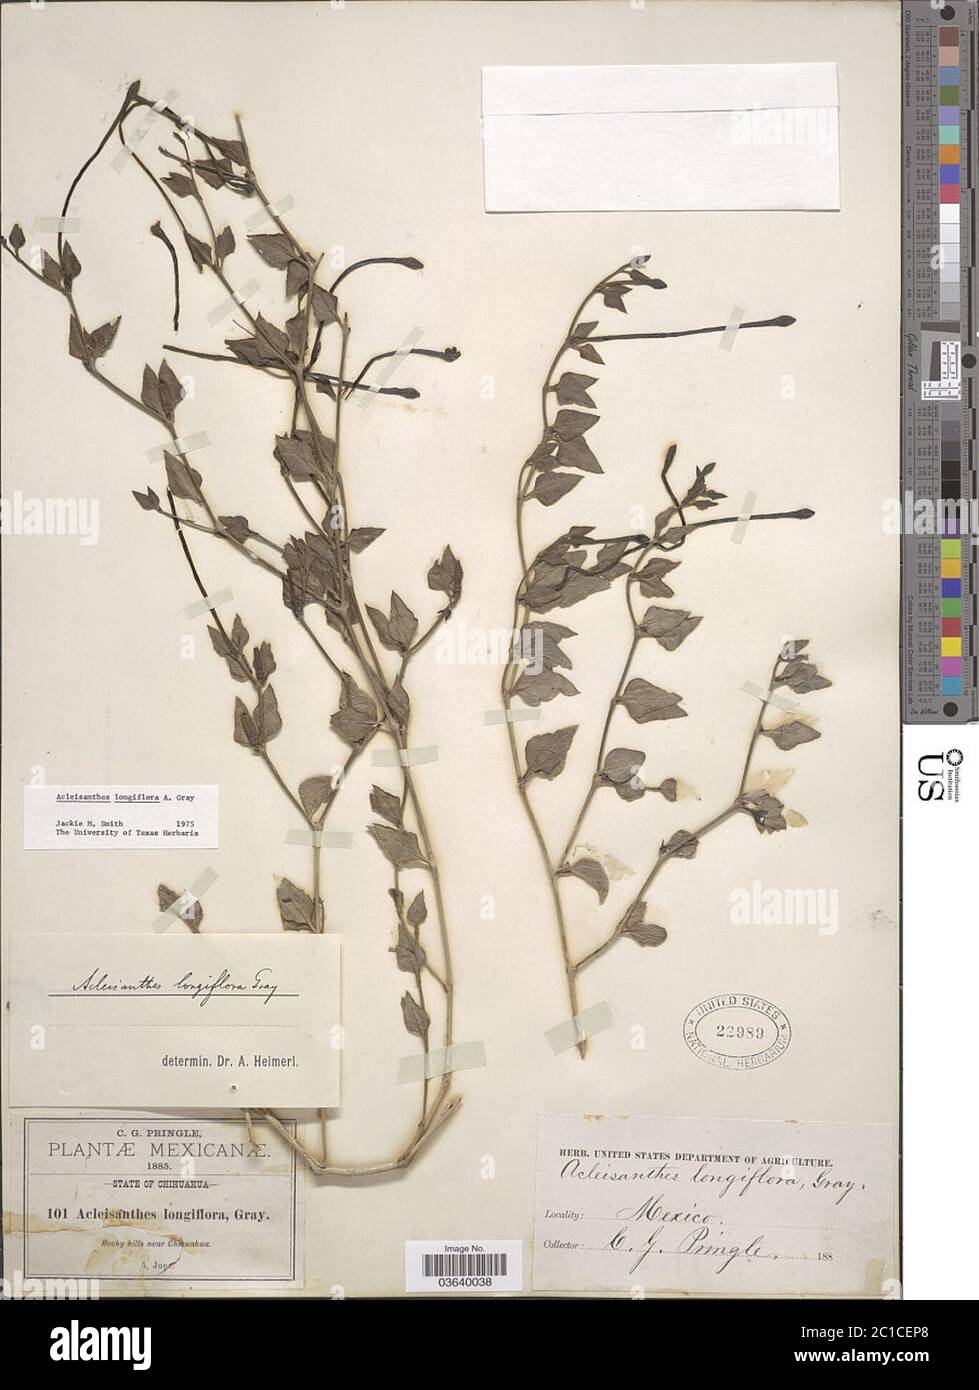 Acleisanthes longiflora A Gray Acleisanthes longiflora A Gray. Stock Photo